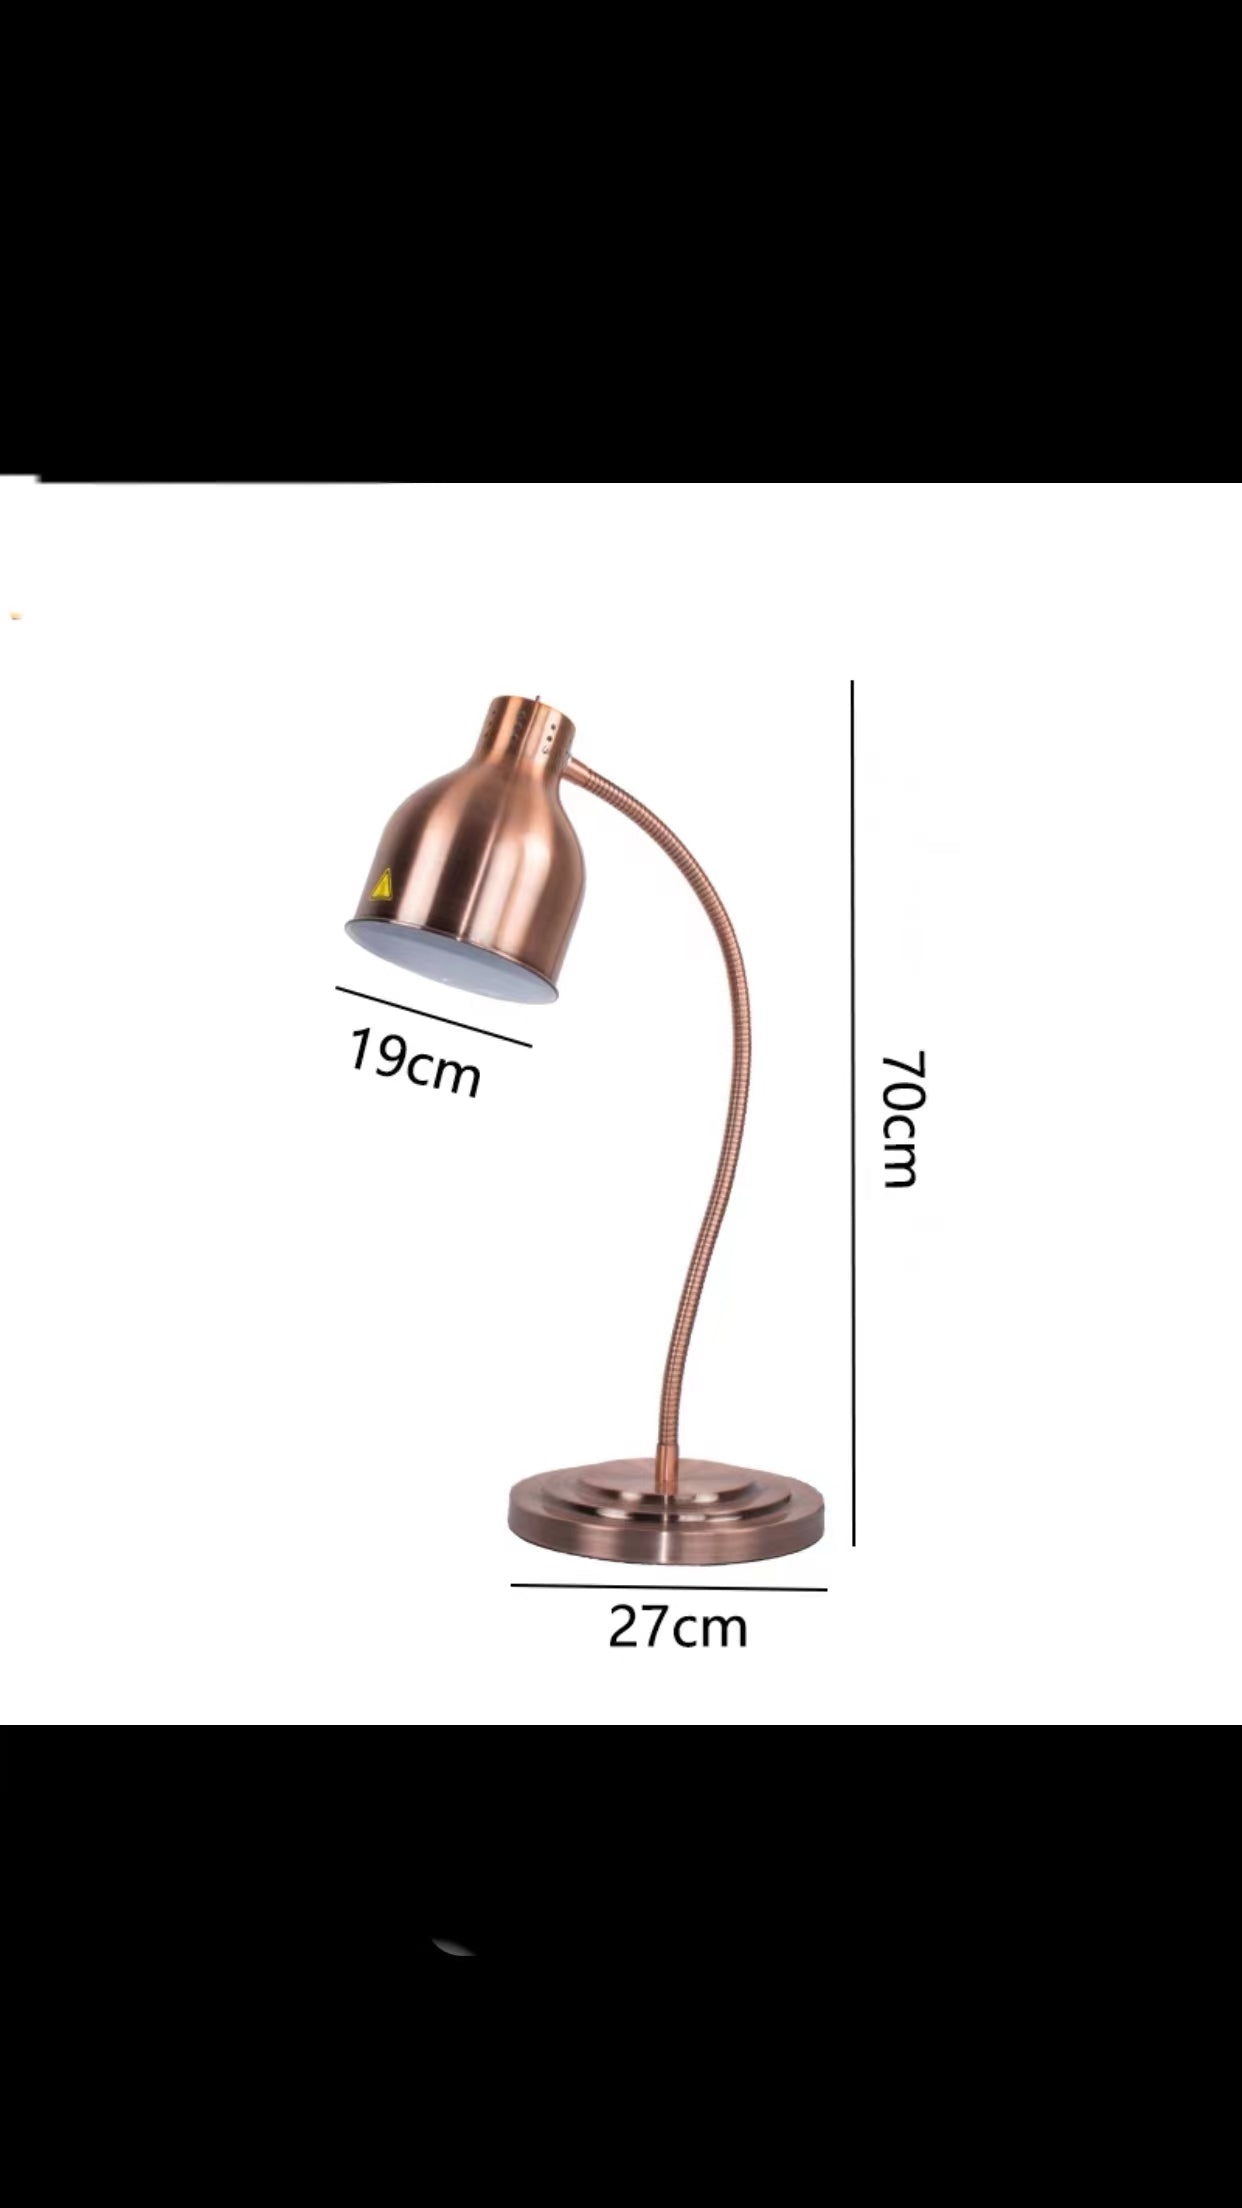 Towcester Metal Desk Lamp - 4 Seasons Home Gadgets